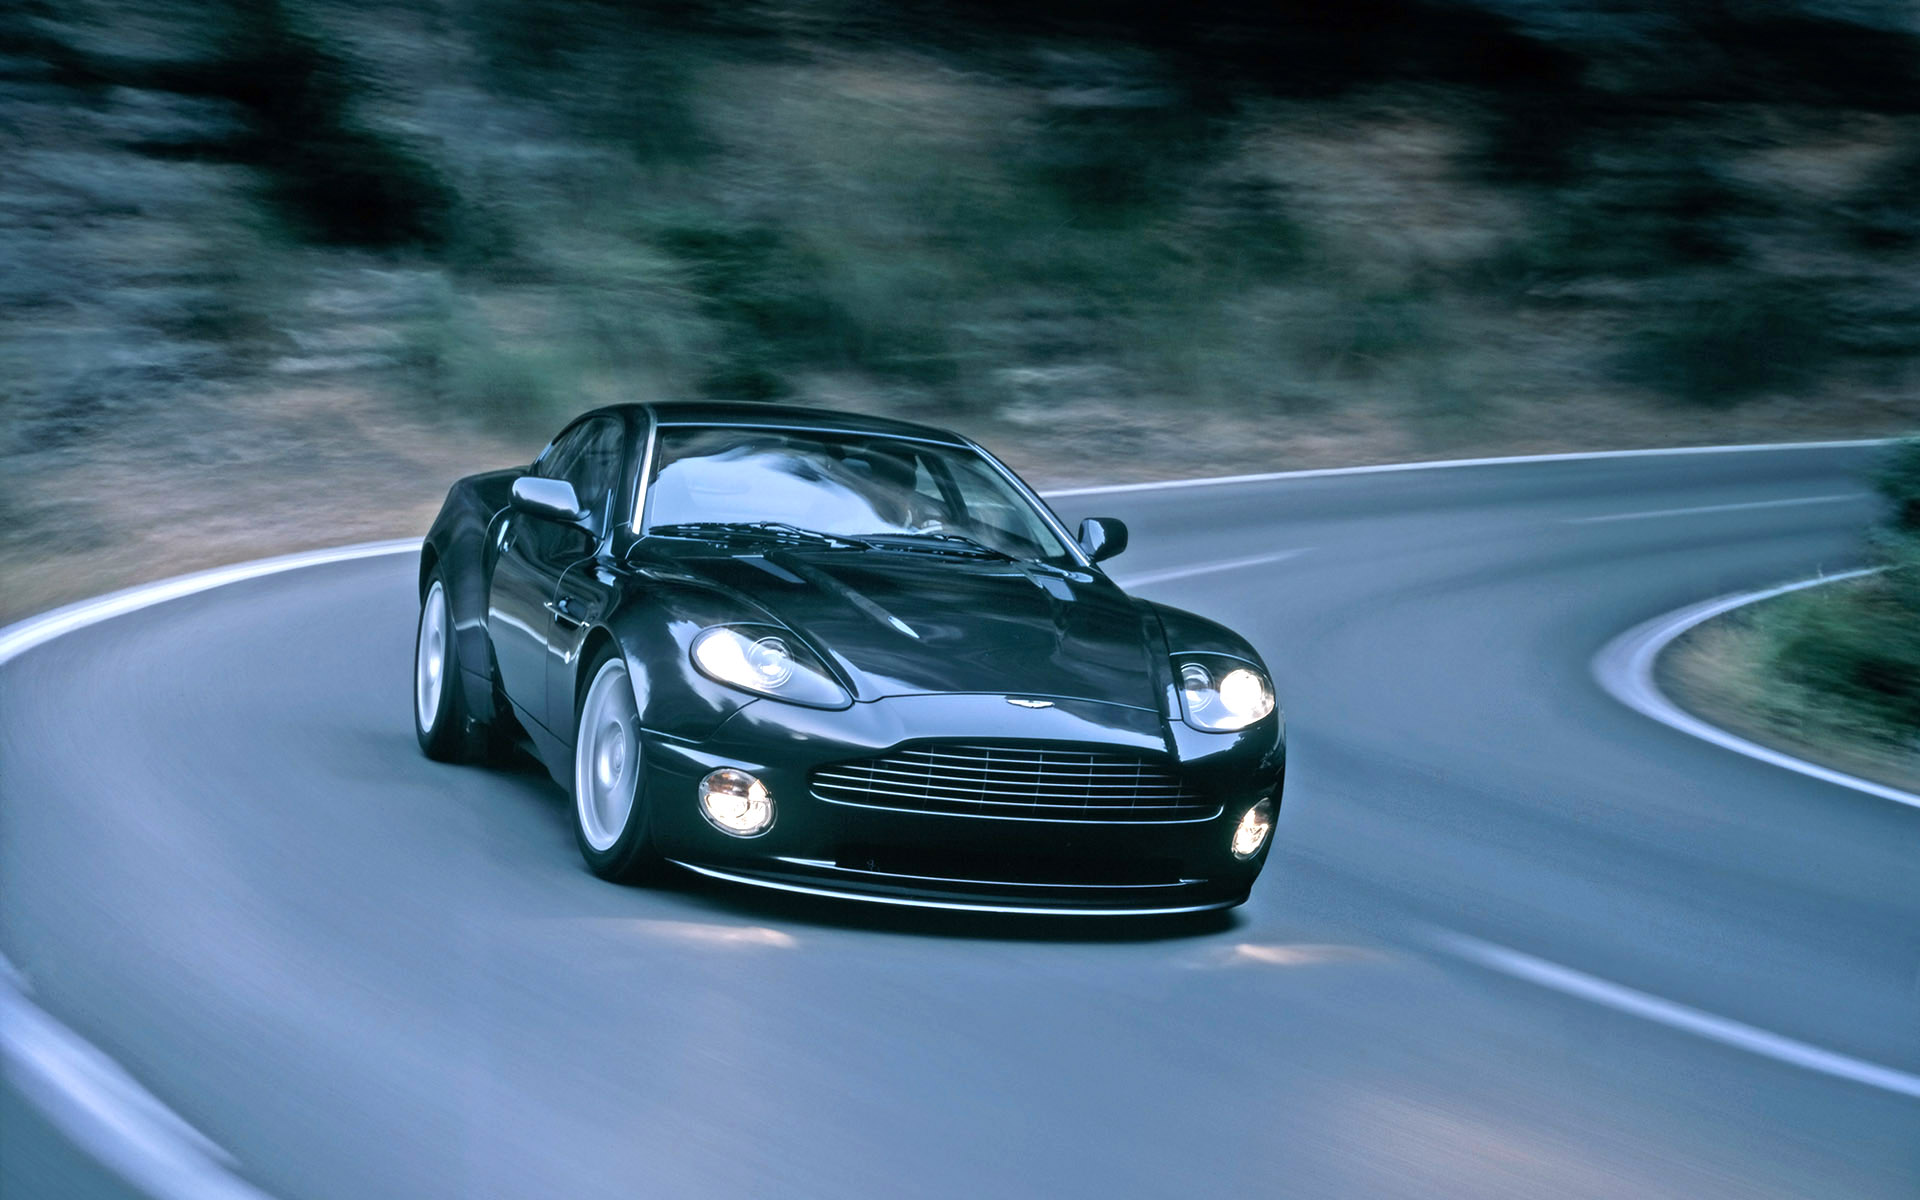  2005 Aston Martin Vanquish S Wallpaper.